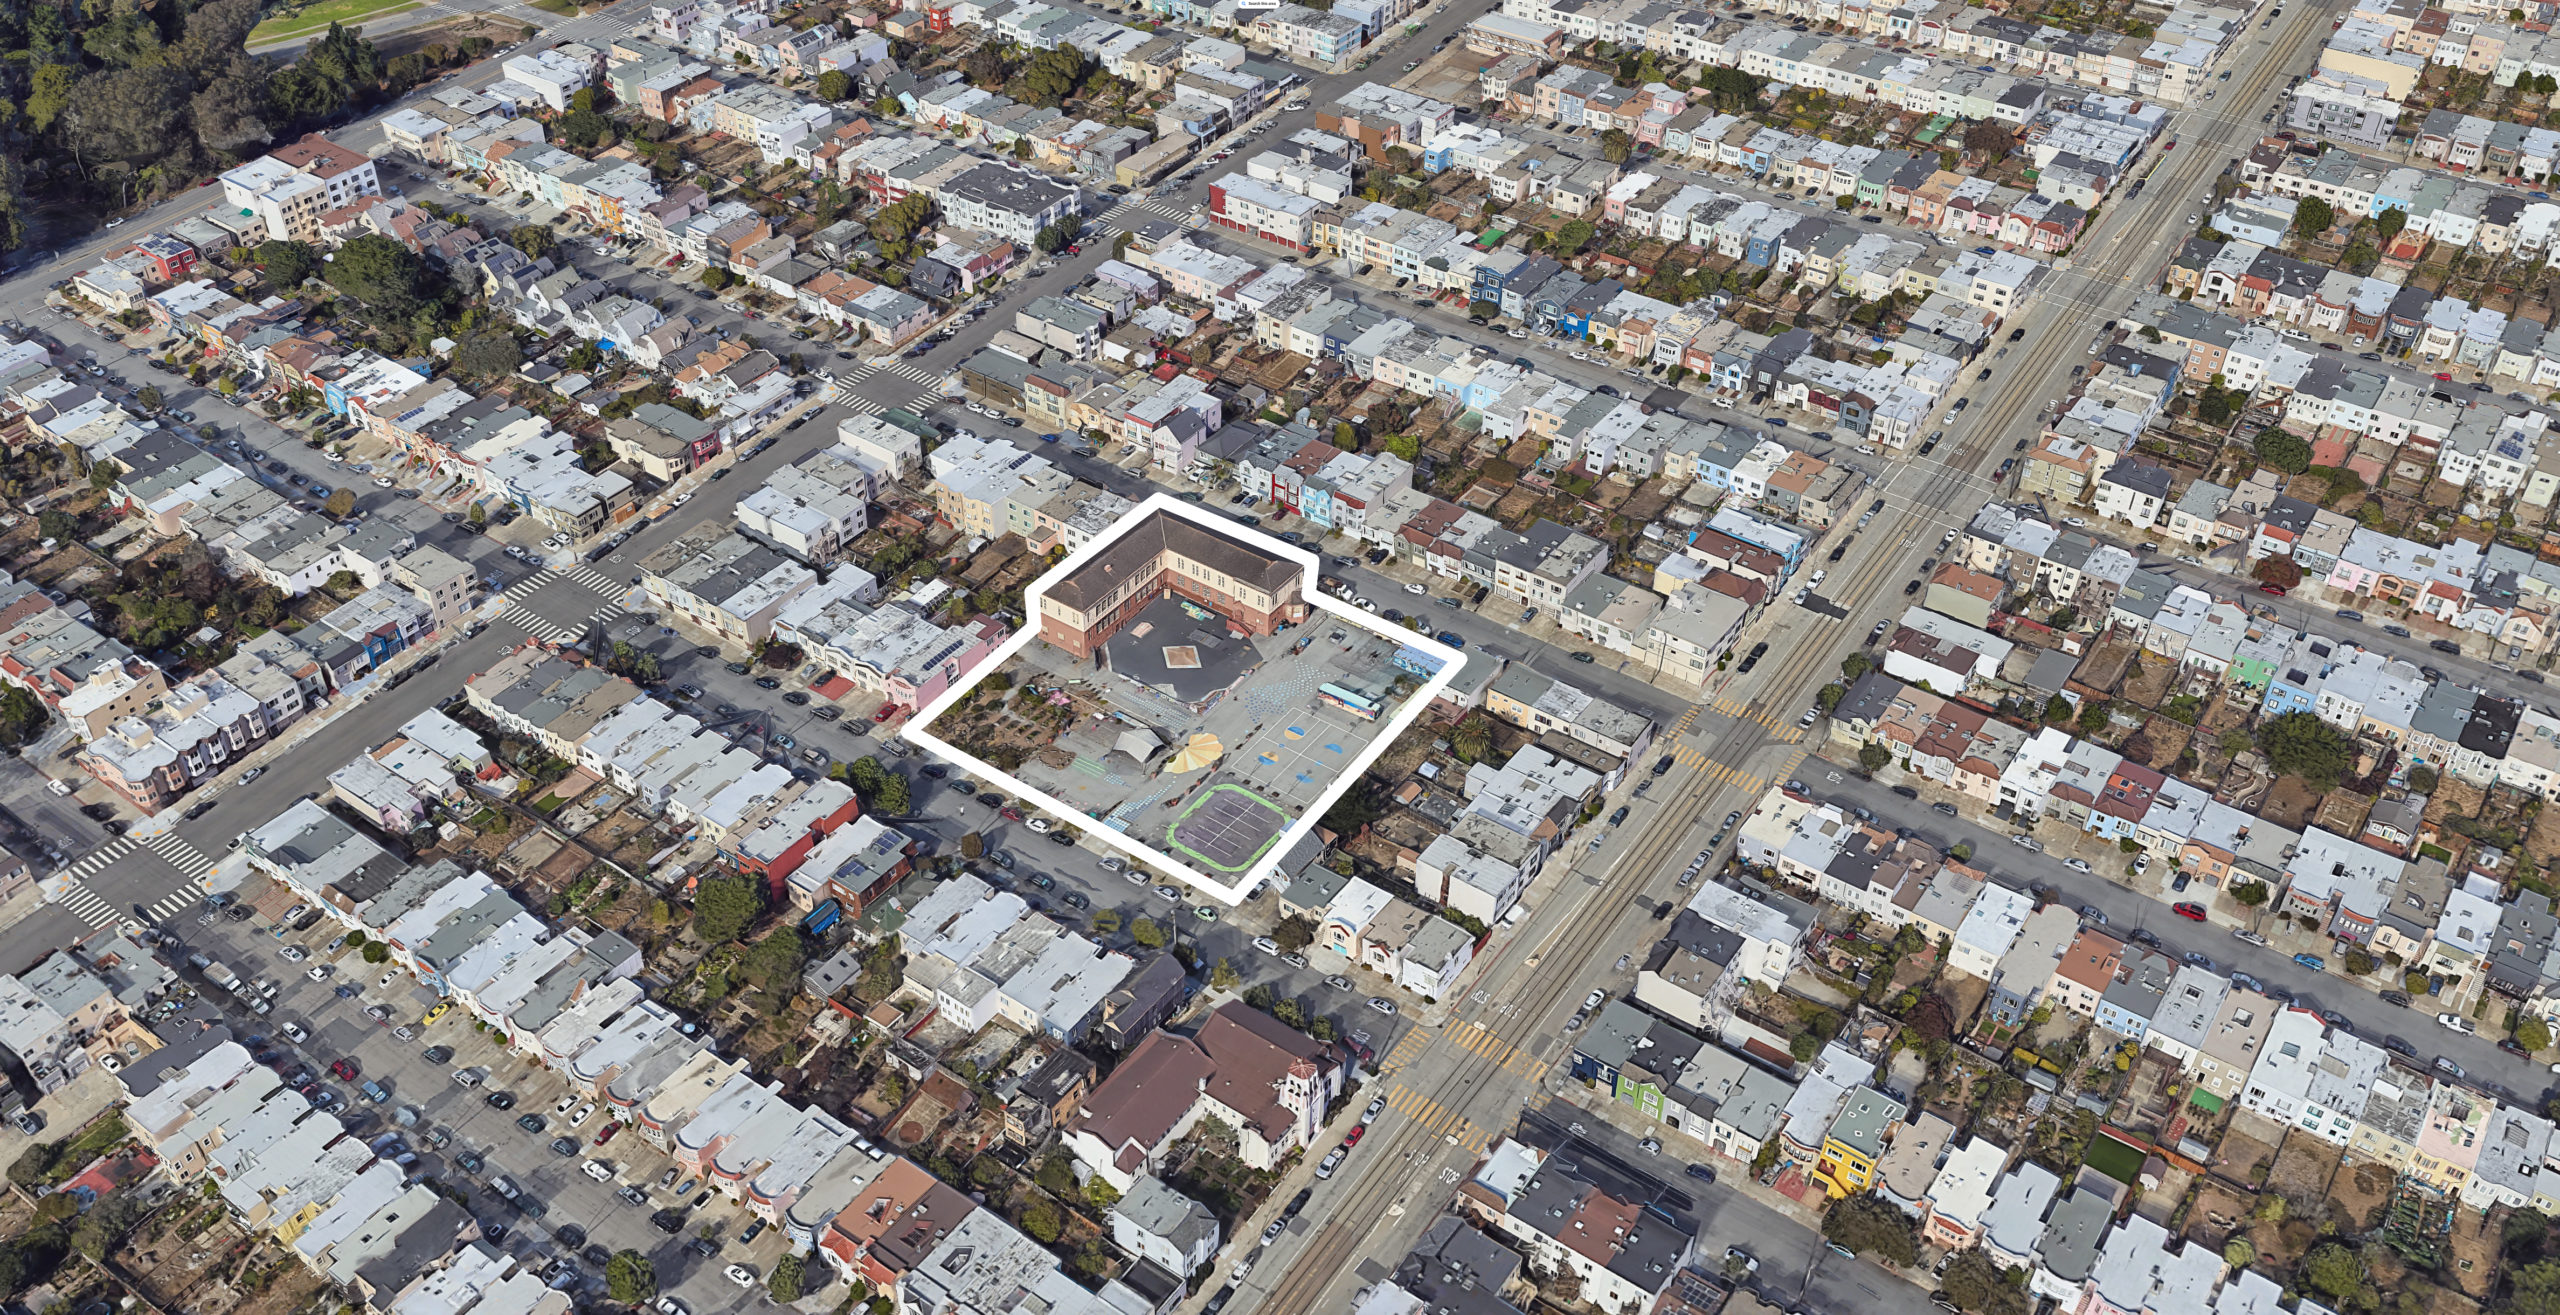 1360 43rd Avenue, image via Google Satellite